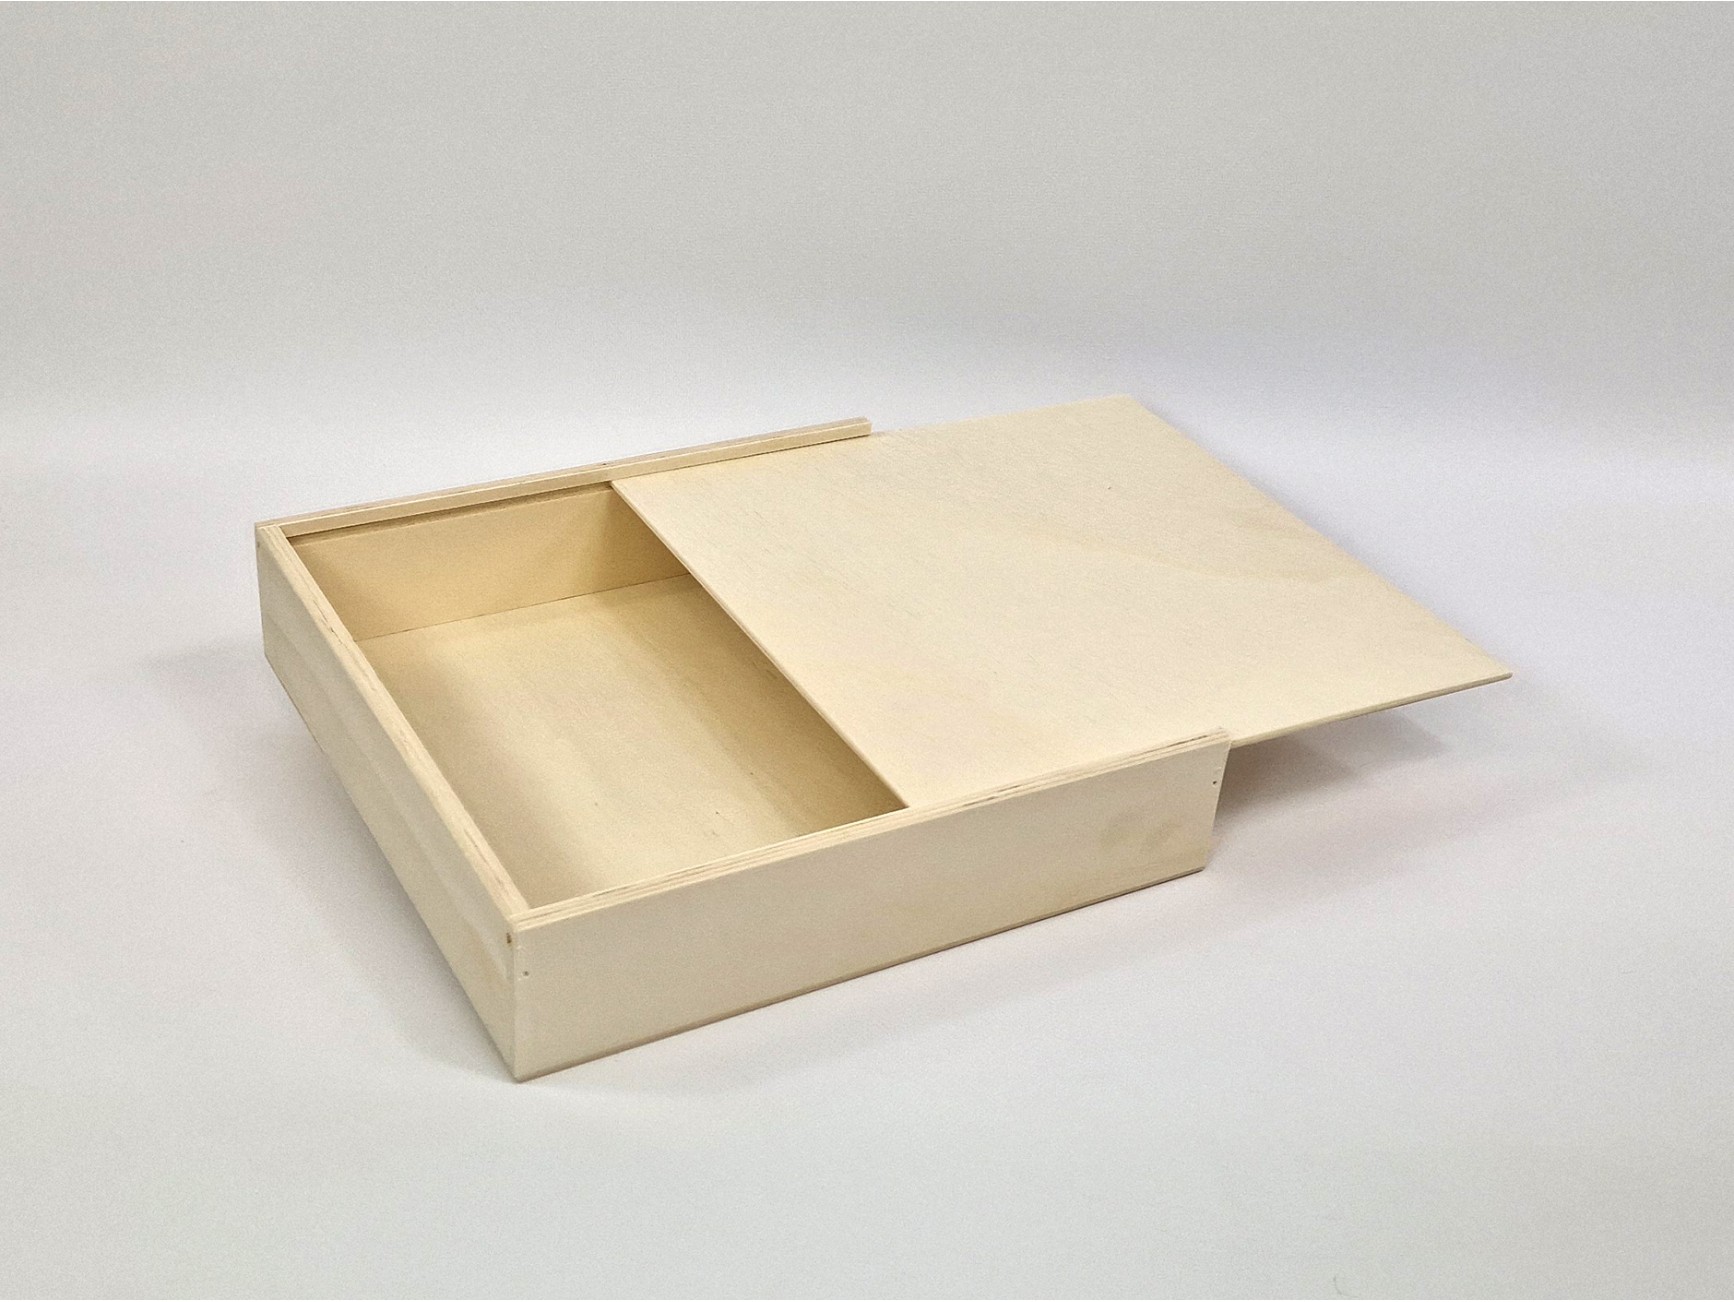 Caja de madera natural con tapa, 40 x 30 x 10 cm, caja de recuerdos, regalo  : : Hogar y cocina